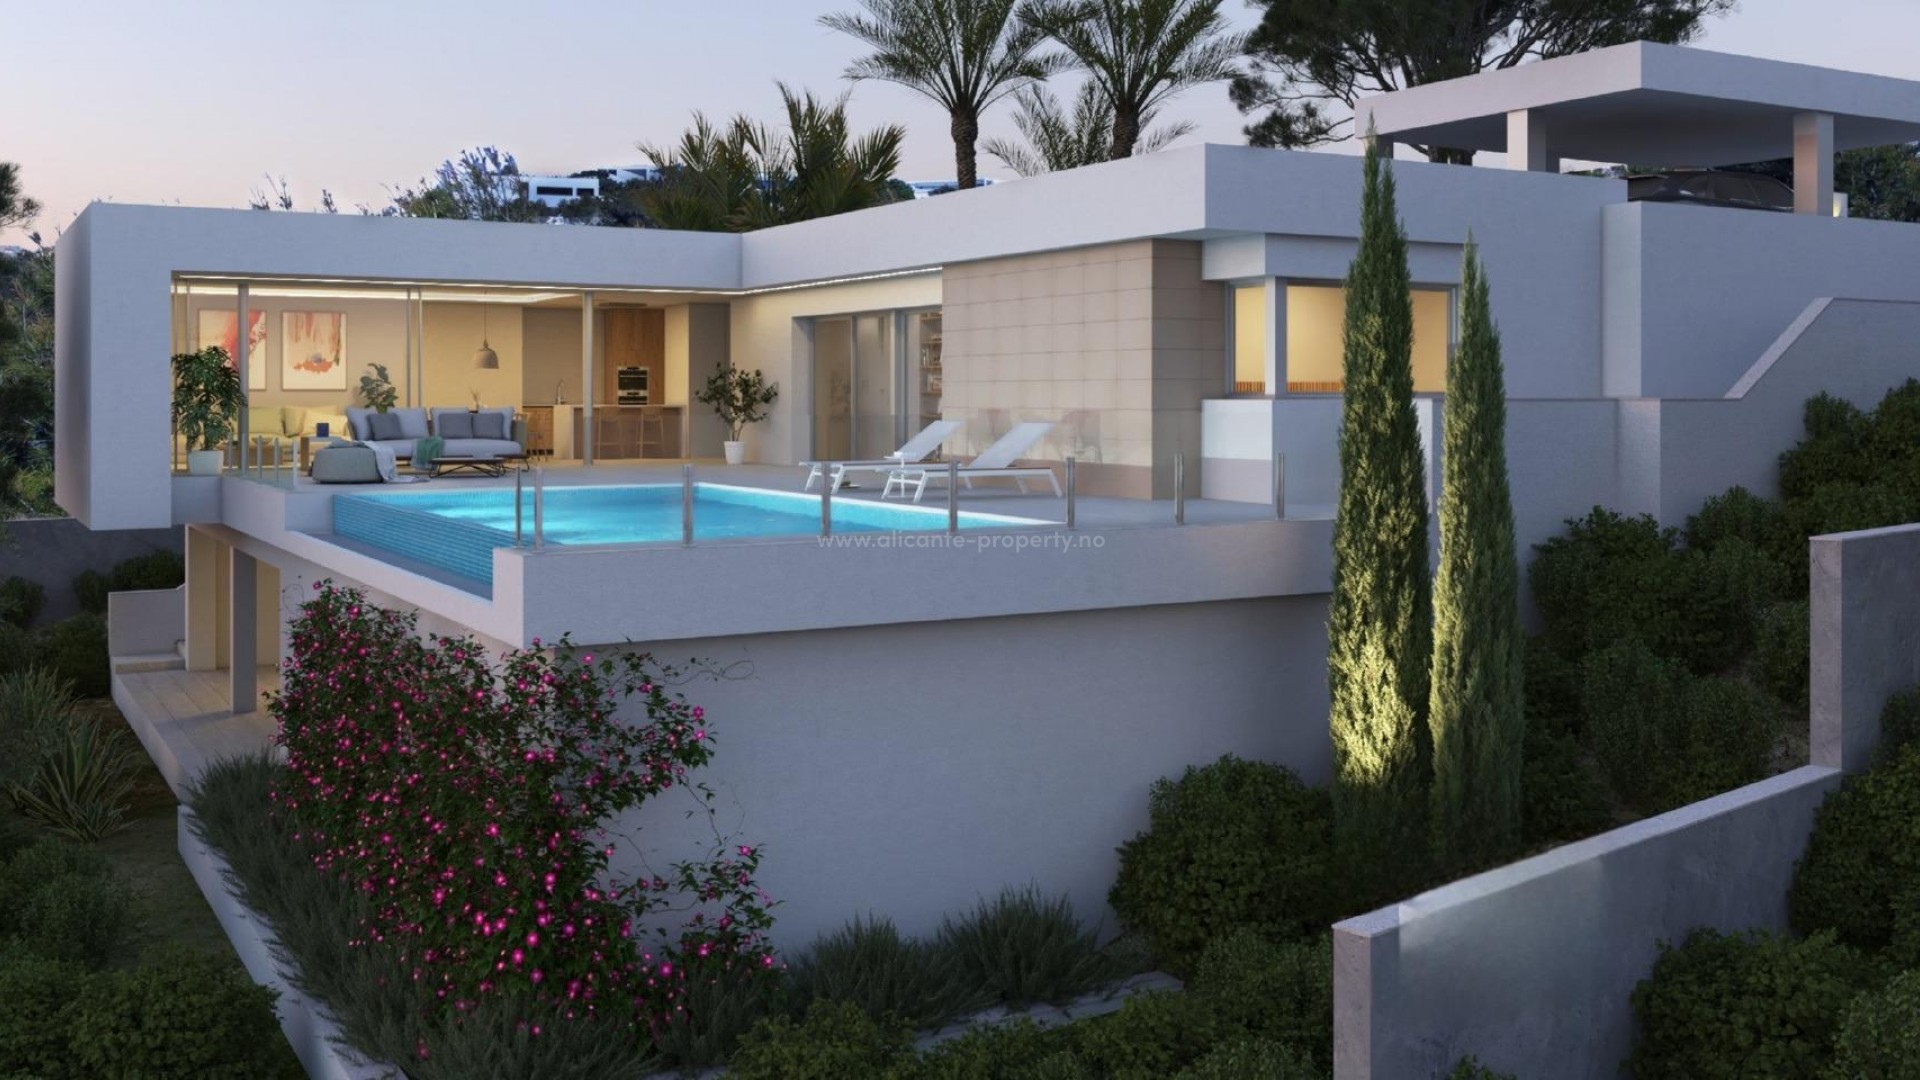 New built luxury villa Benitachell, Cumbre del Sol, 3 bedrooms, 3 bathrooms, fantastically impressive infinity pool merging with the sea.